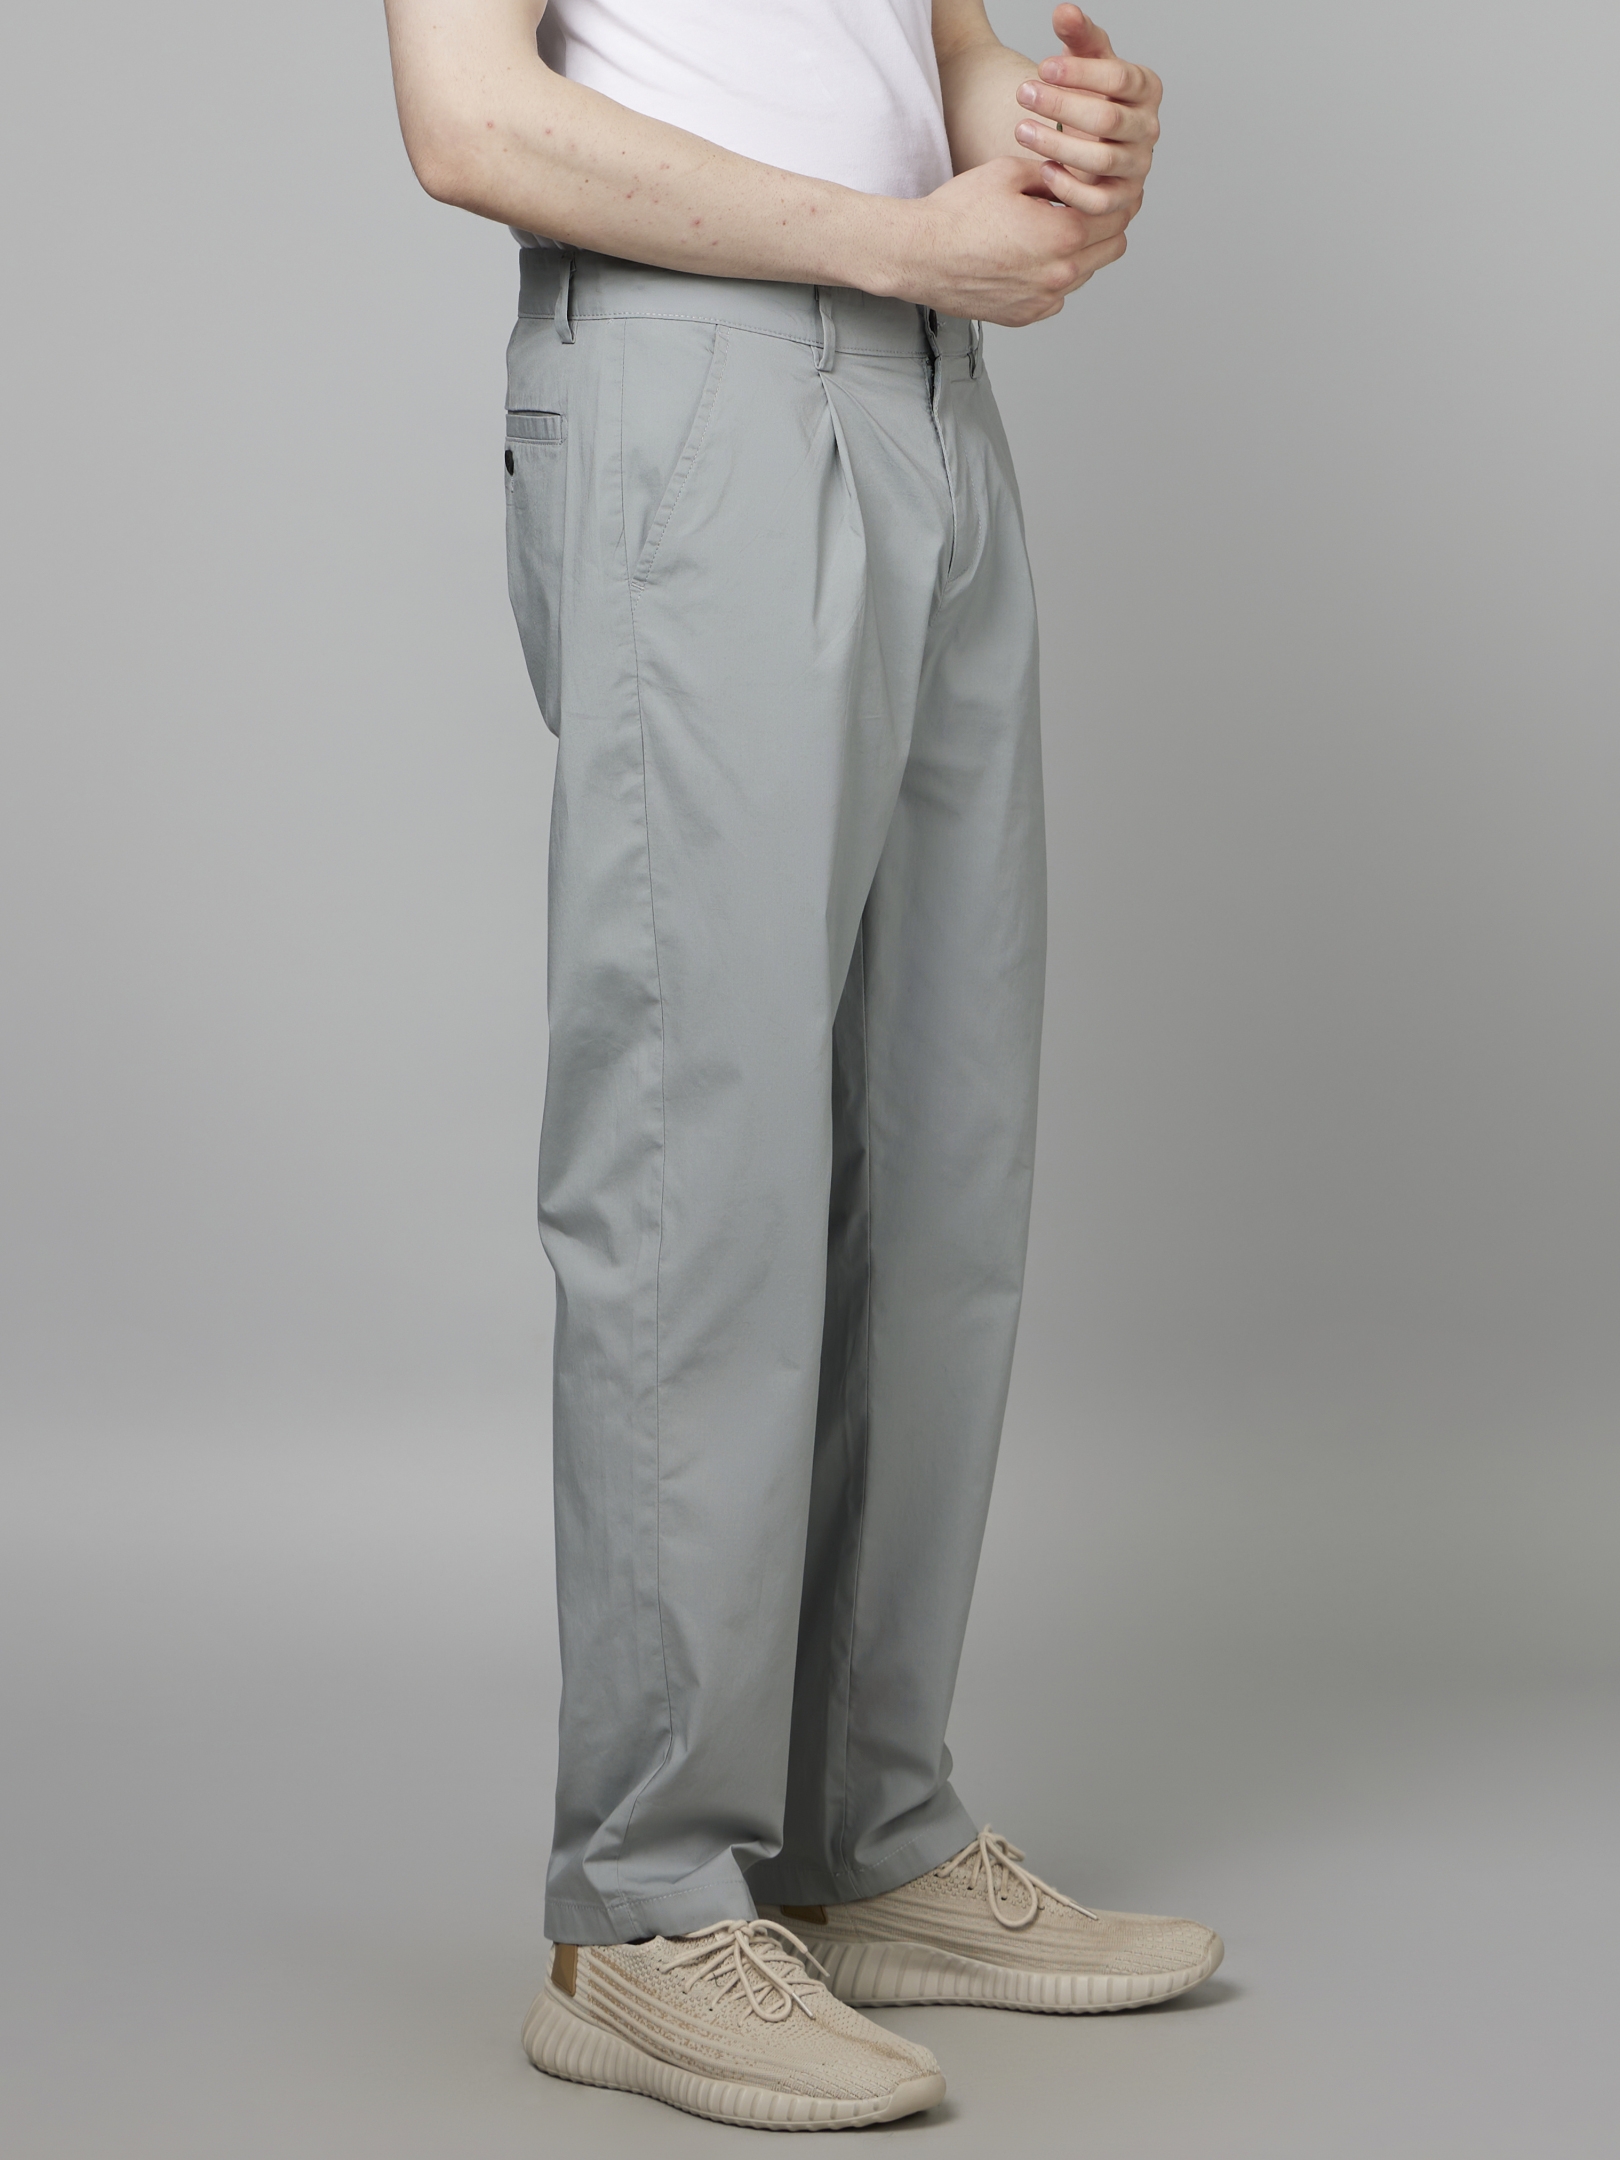 Men's Grey Cotton Blend Solid Trousers